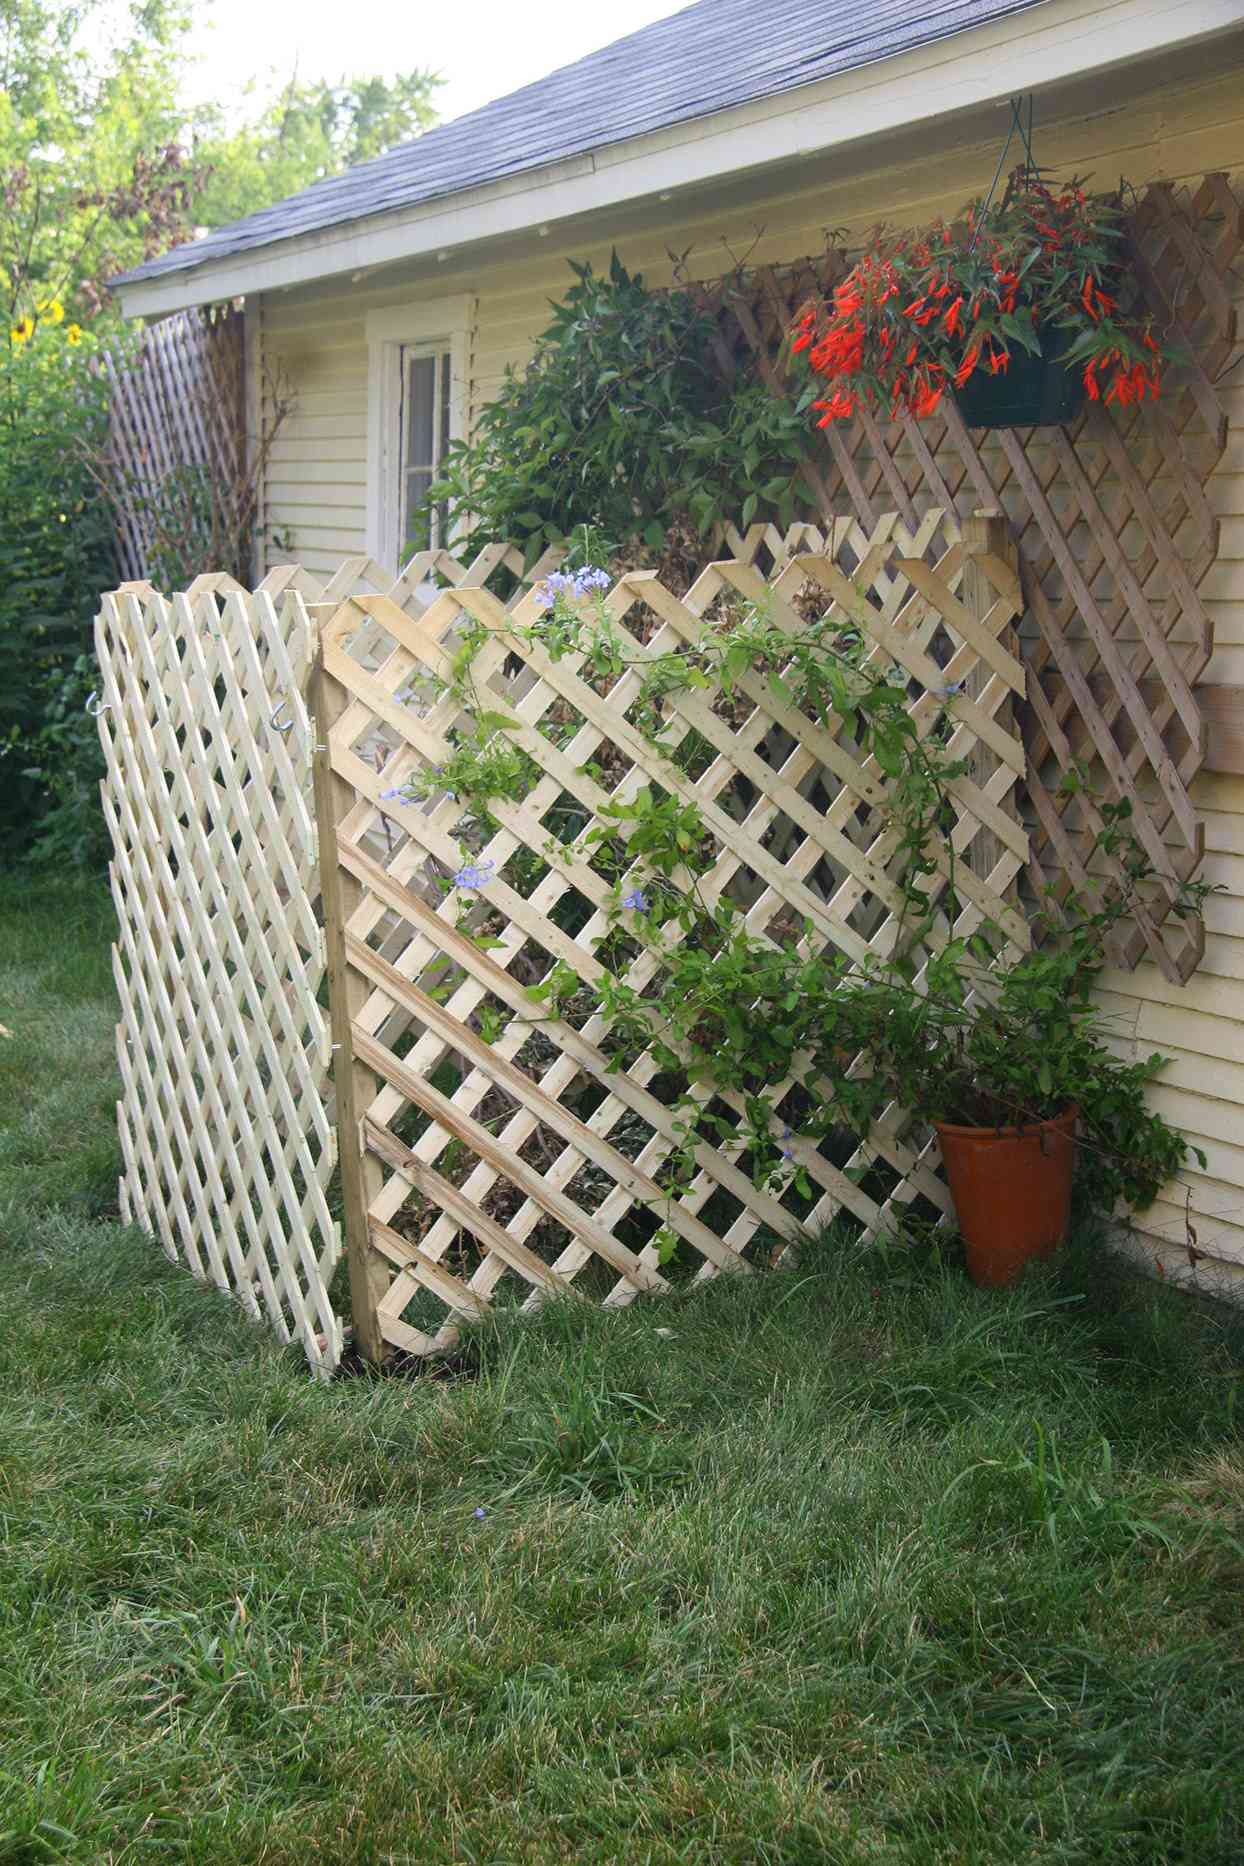 contenedores de abono - lattice fence around compost bin